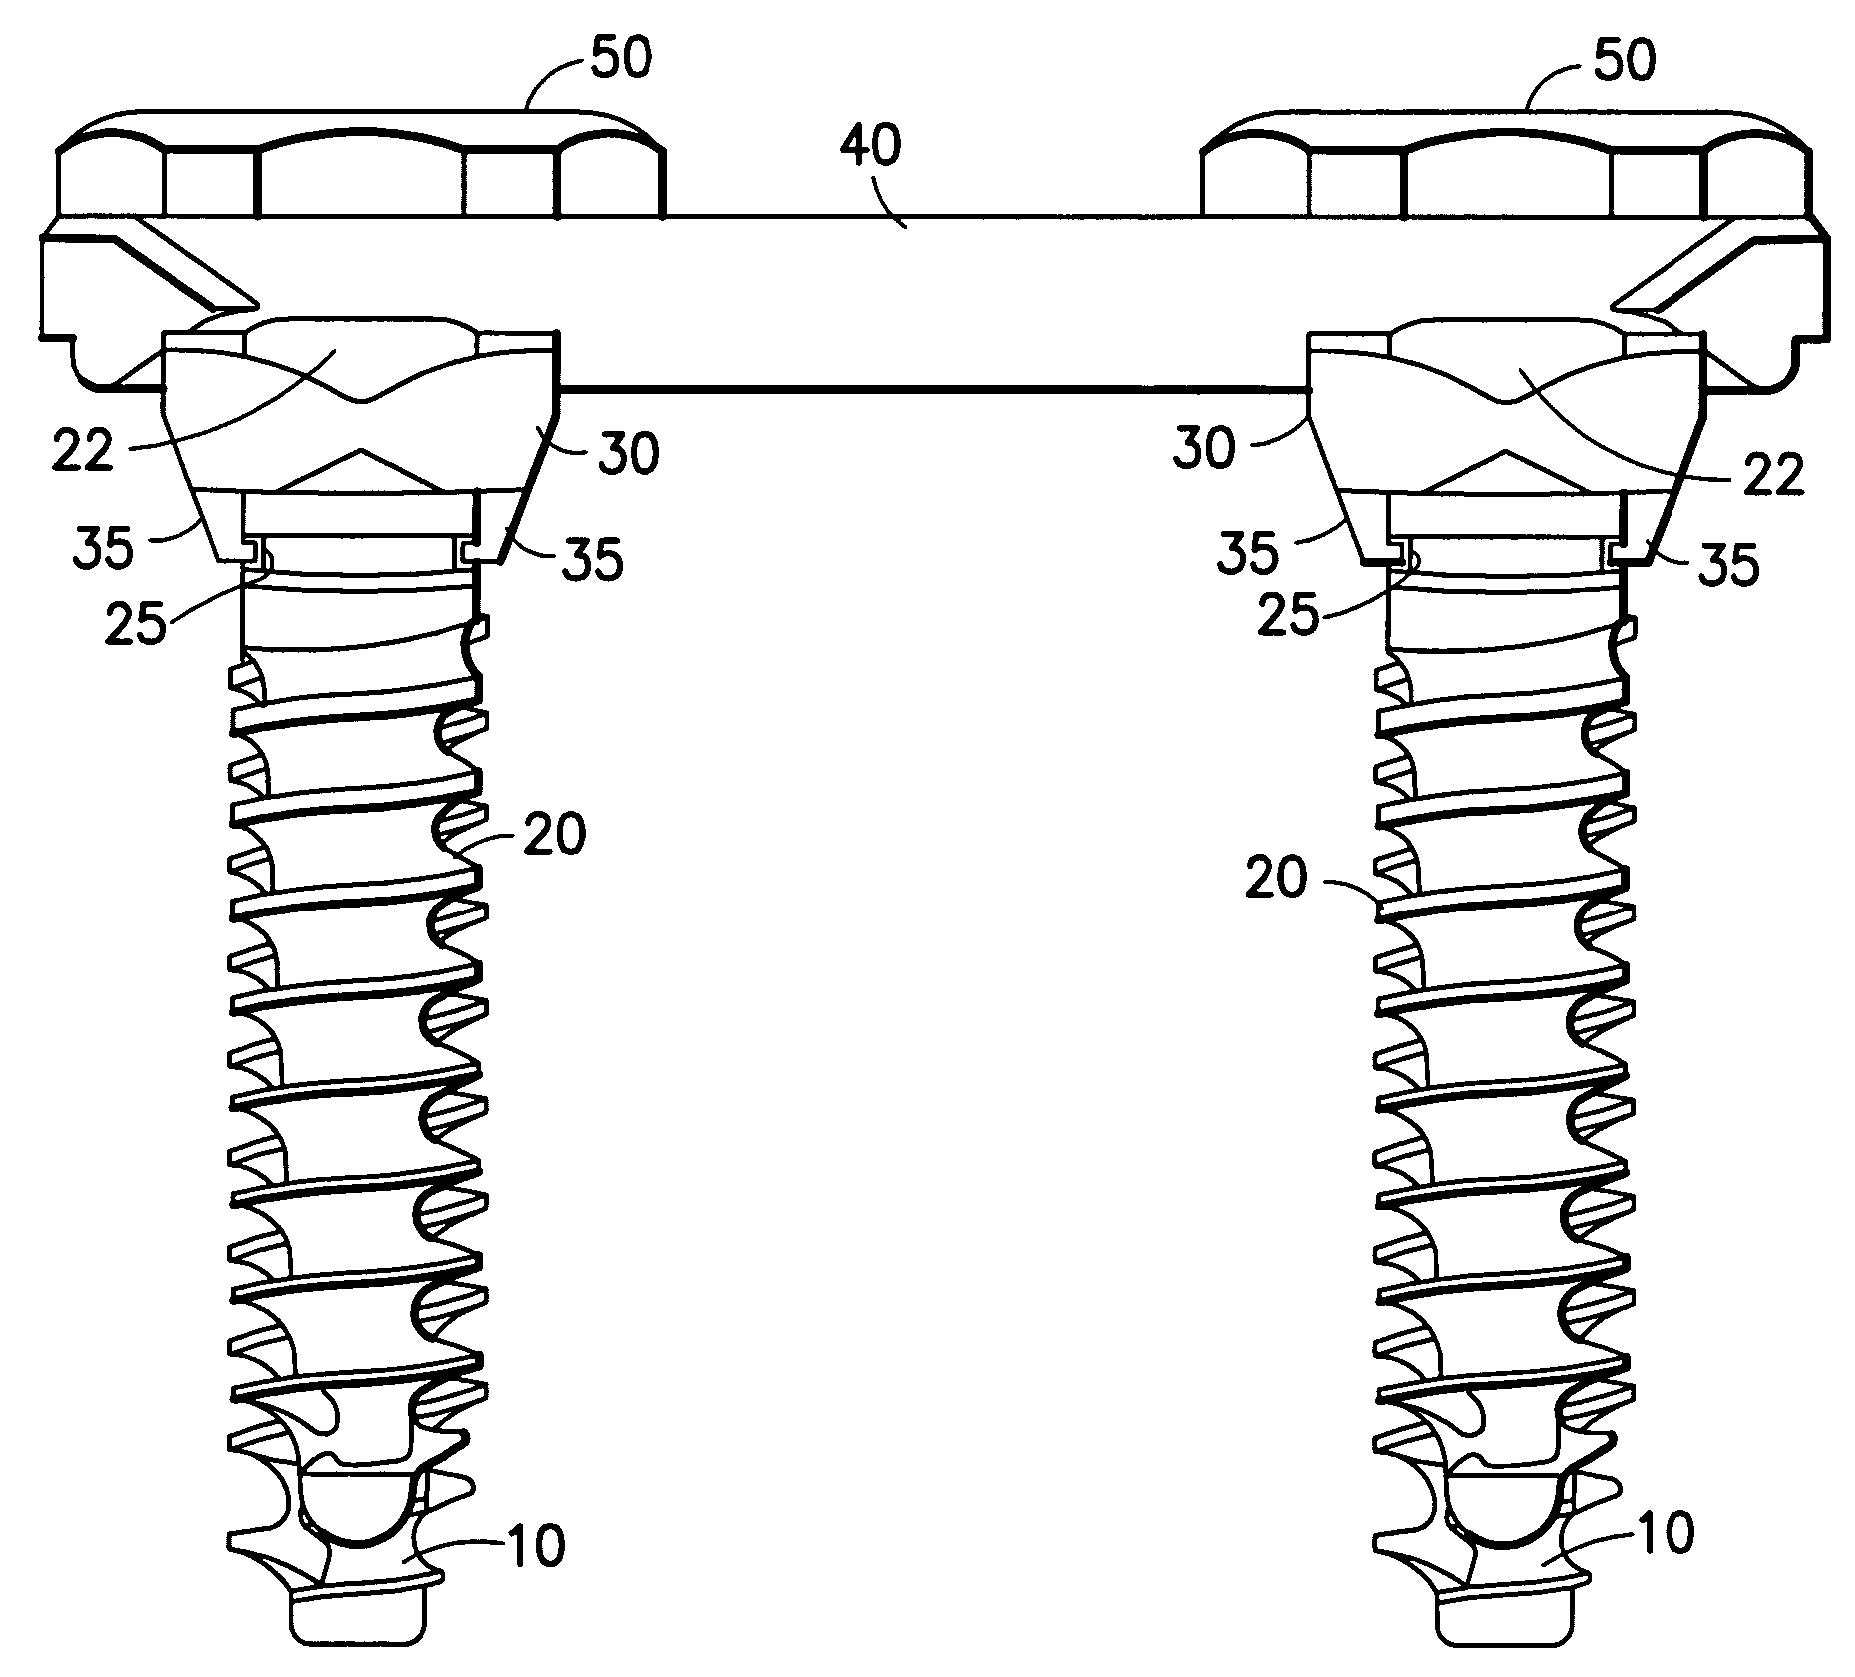 Locking mechanism for a bone screw